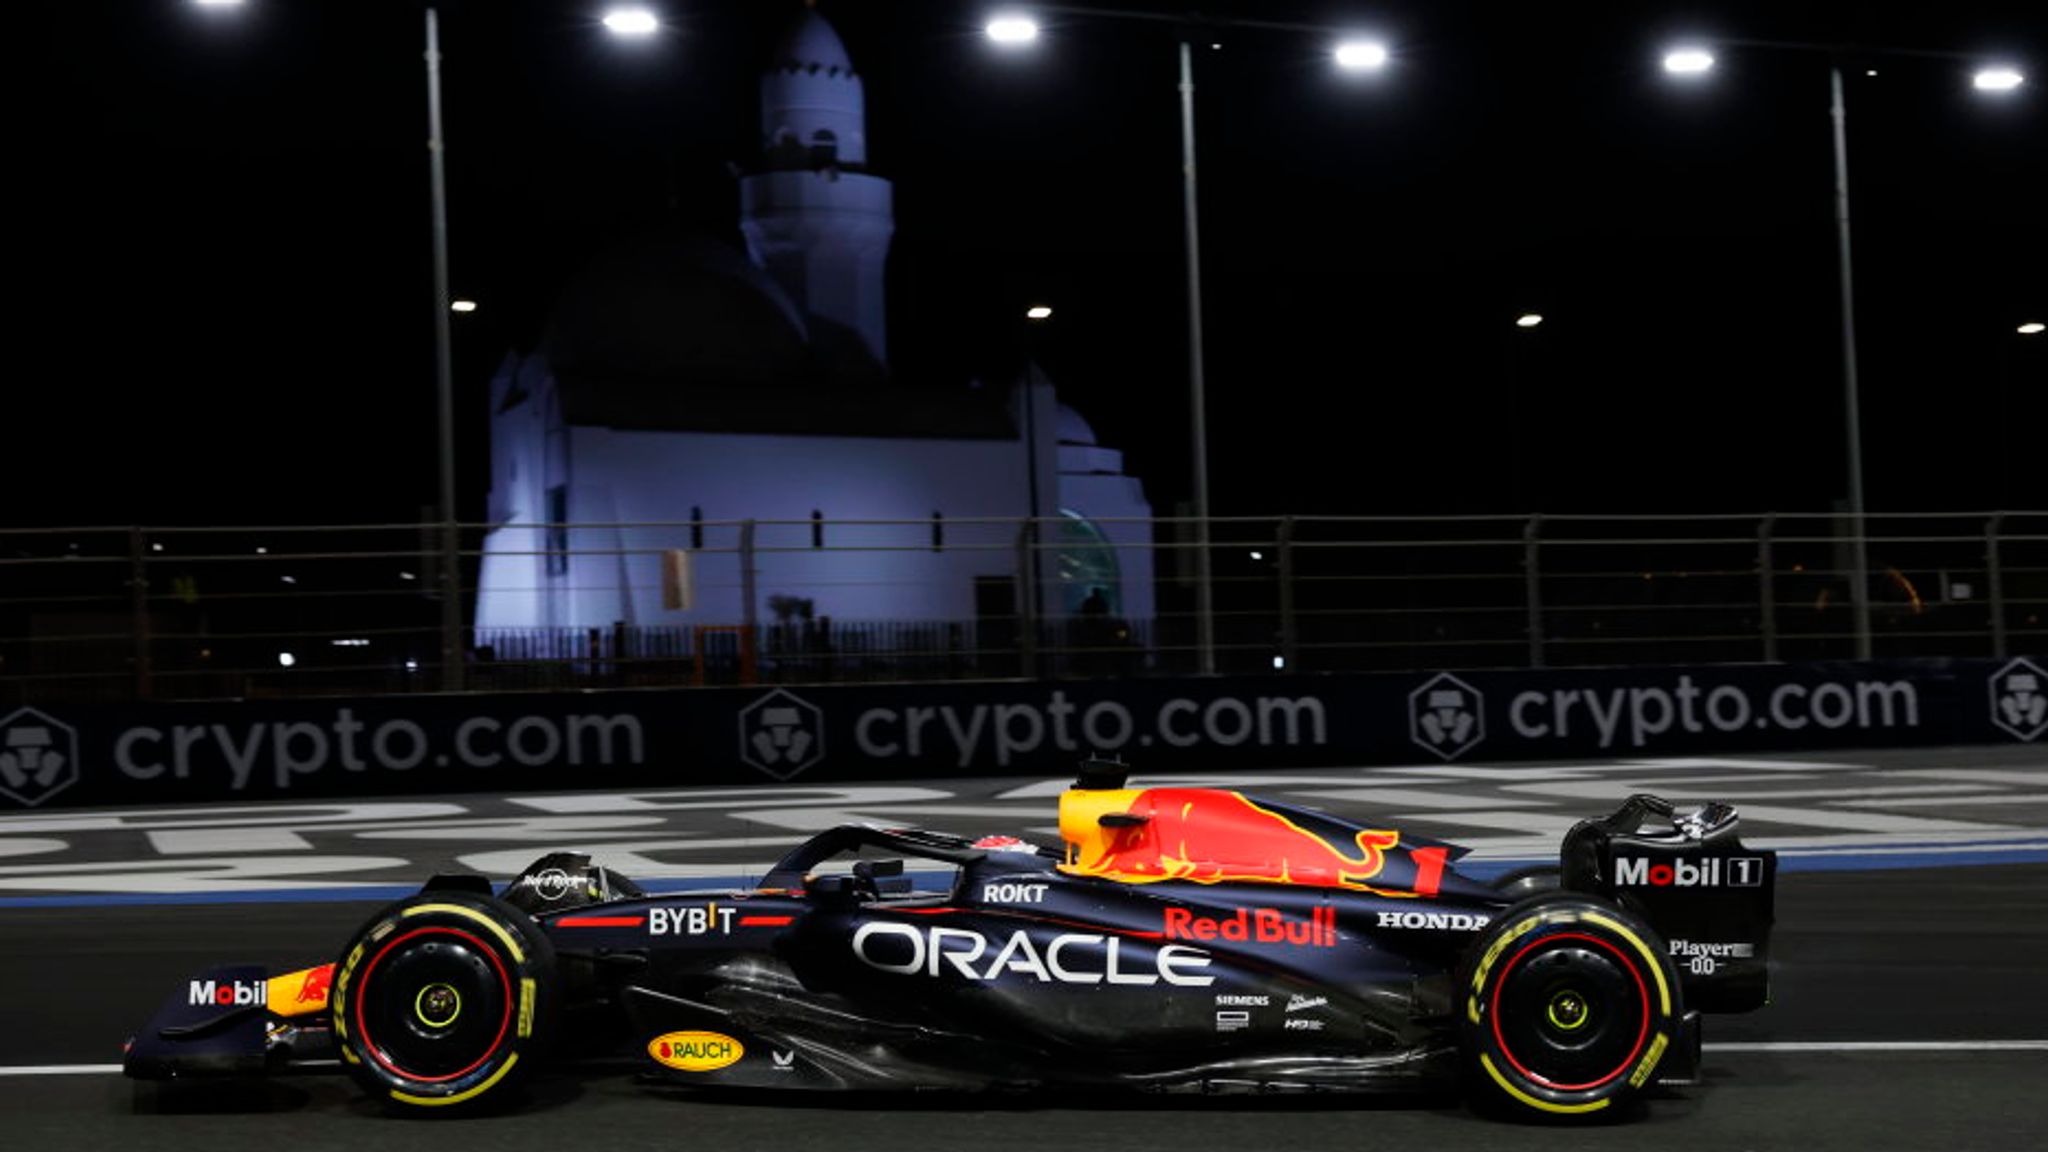 Saudi Arabian GP Max Verstappen tops Fernando Alonso in tight second practice in Jeddah F1 News